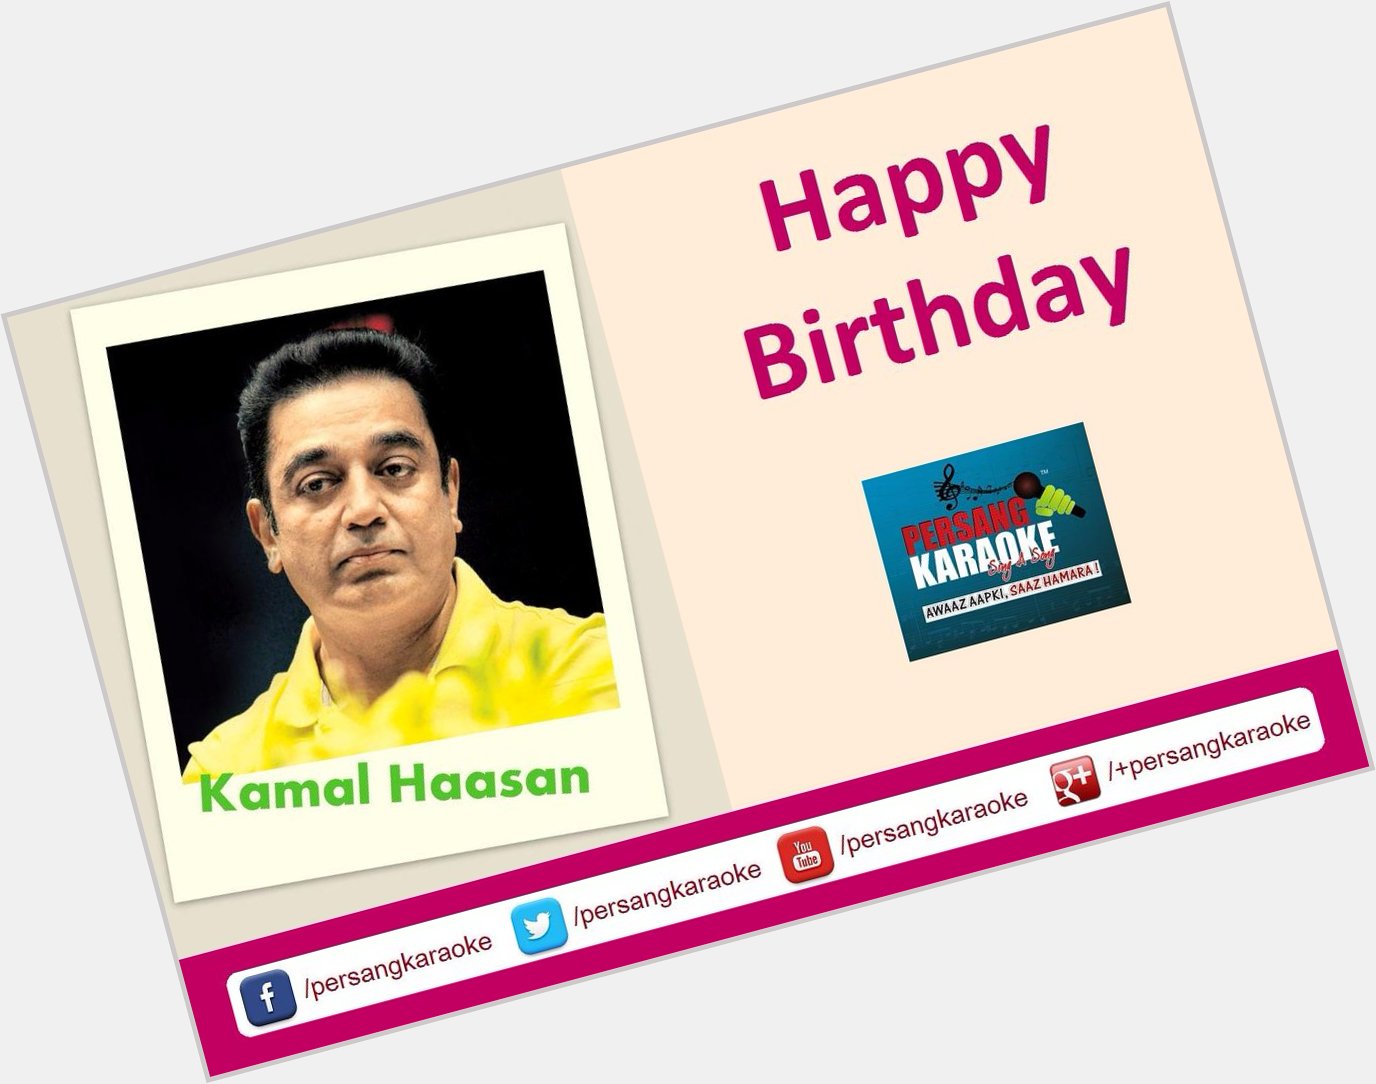 Wishing one of the multi-talented actors of Indian Cinema, Kamal Haasan a very Happy Birthday!  